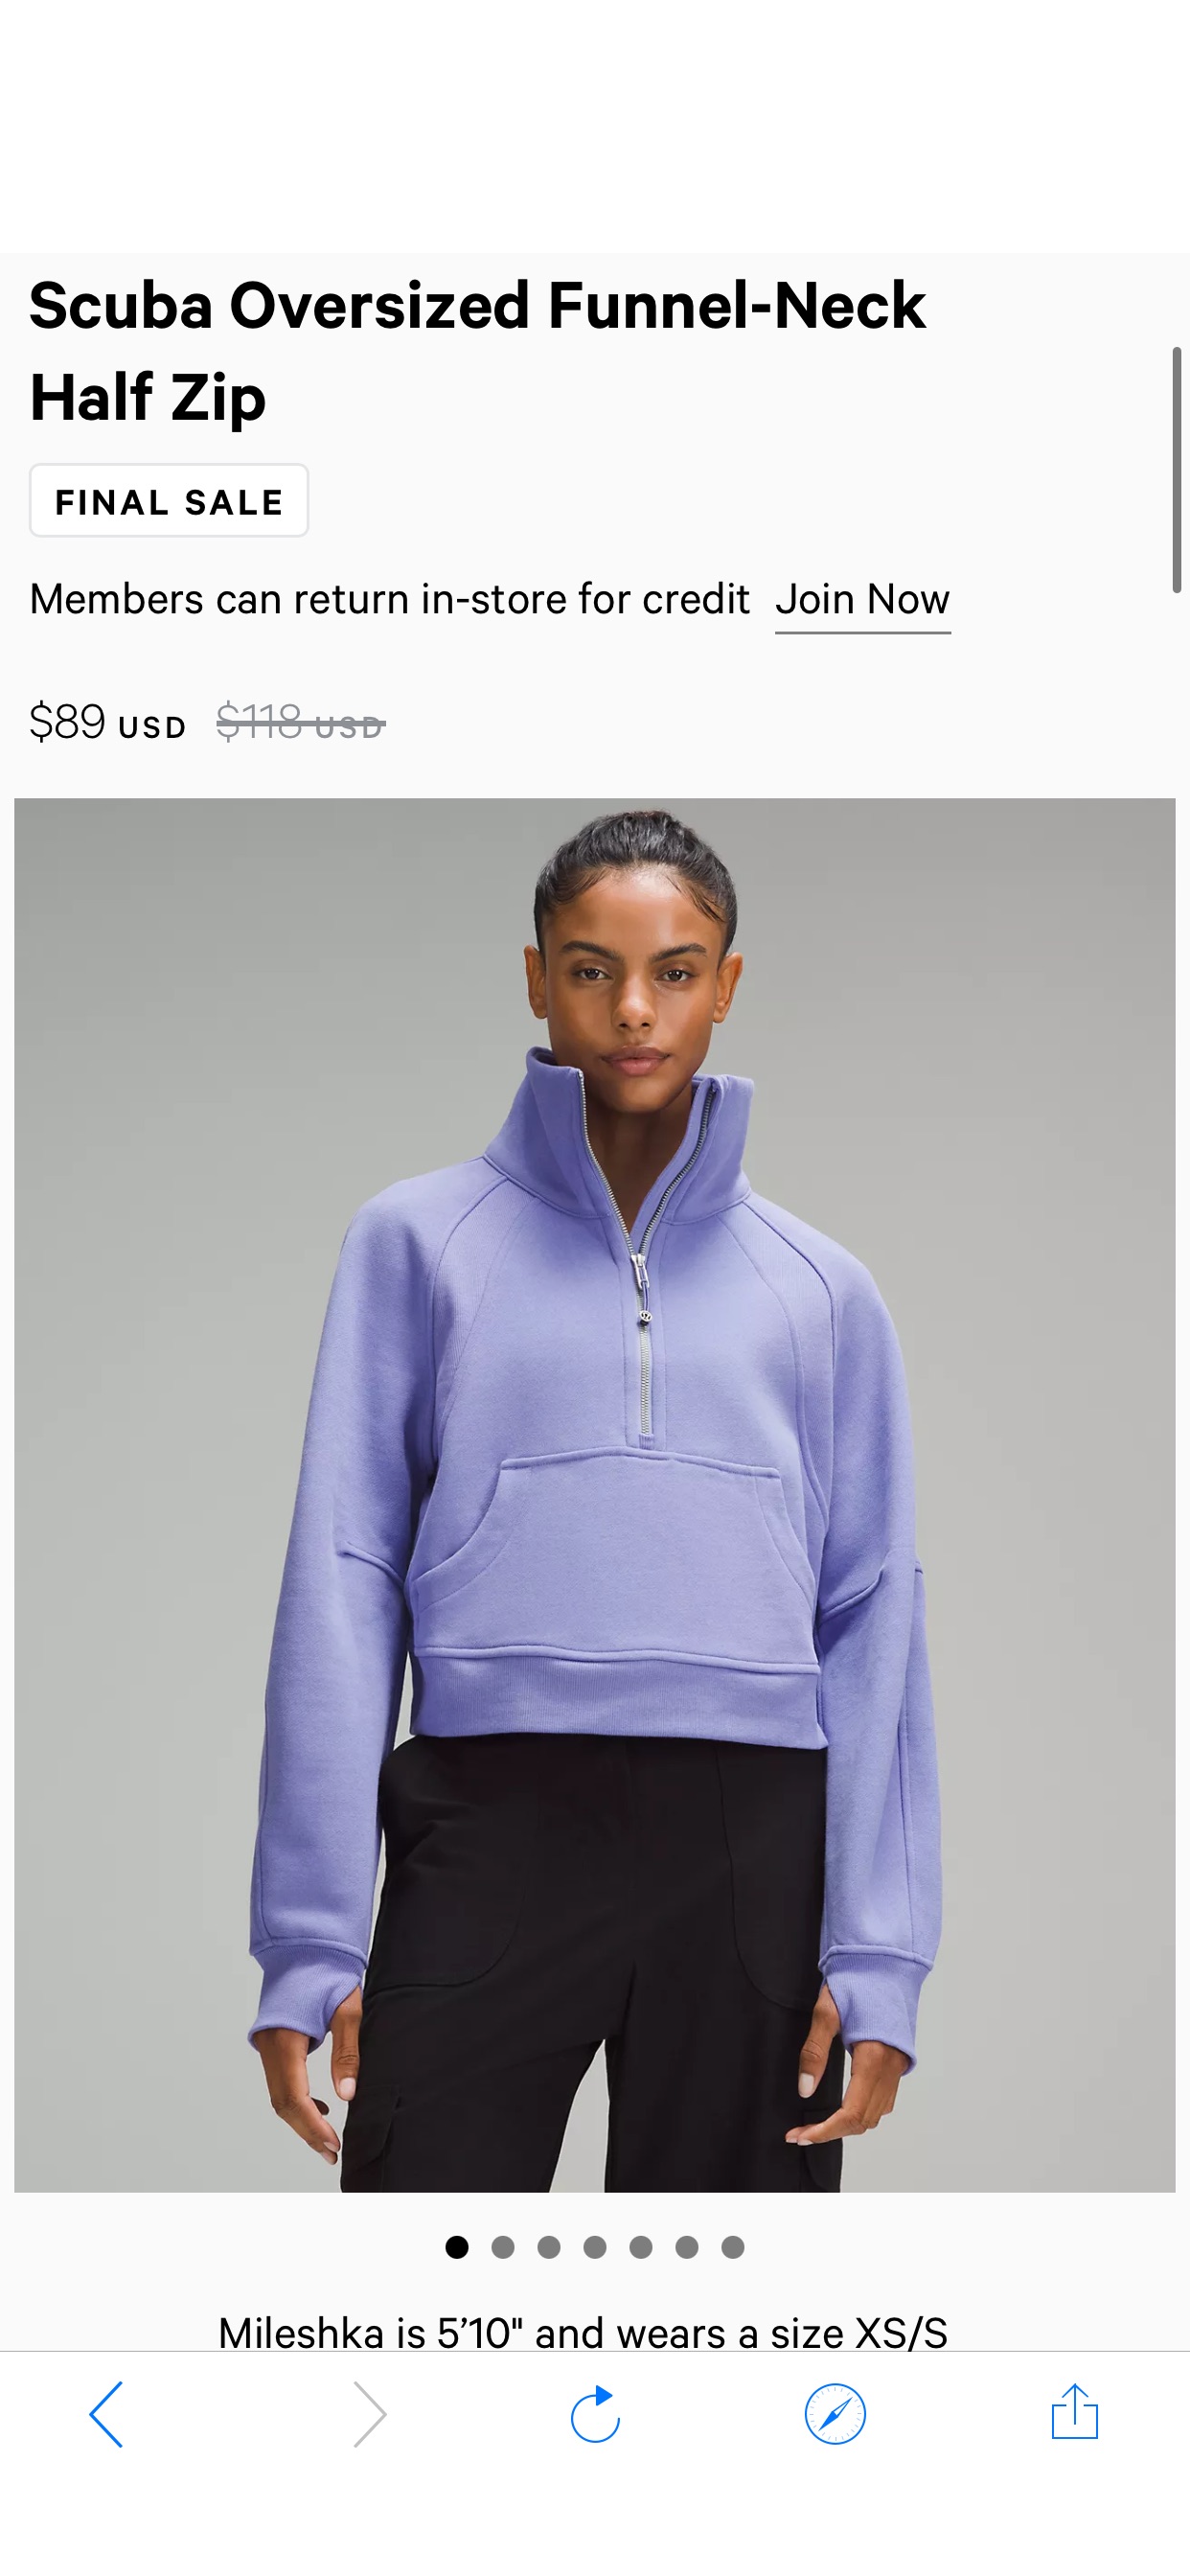 Scuba Oversized Funnel-Neck Half Zip | Women's Hoodies & Sweatshirts | lululemon Scuba Oversized Funnel-Neck Half Zip
原價118，現在才89，紫色 XL/XXL码全